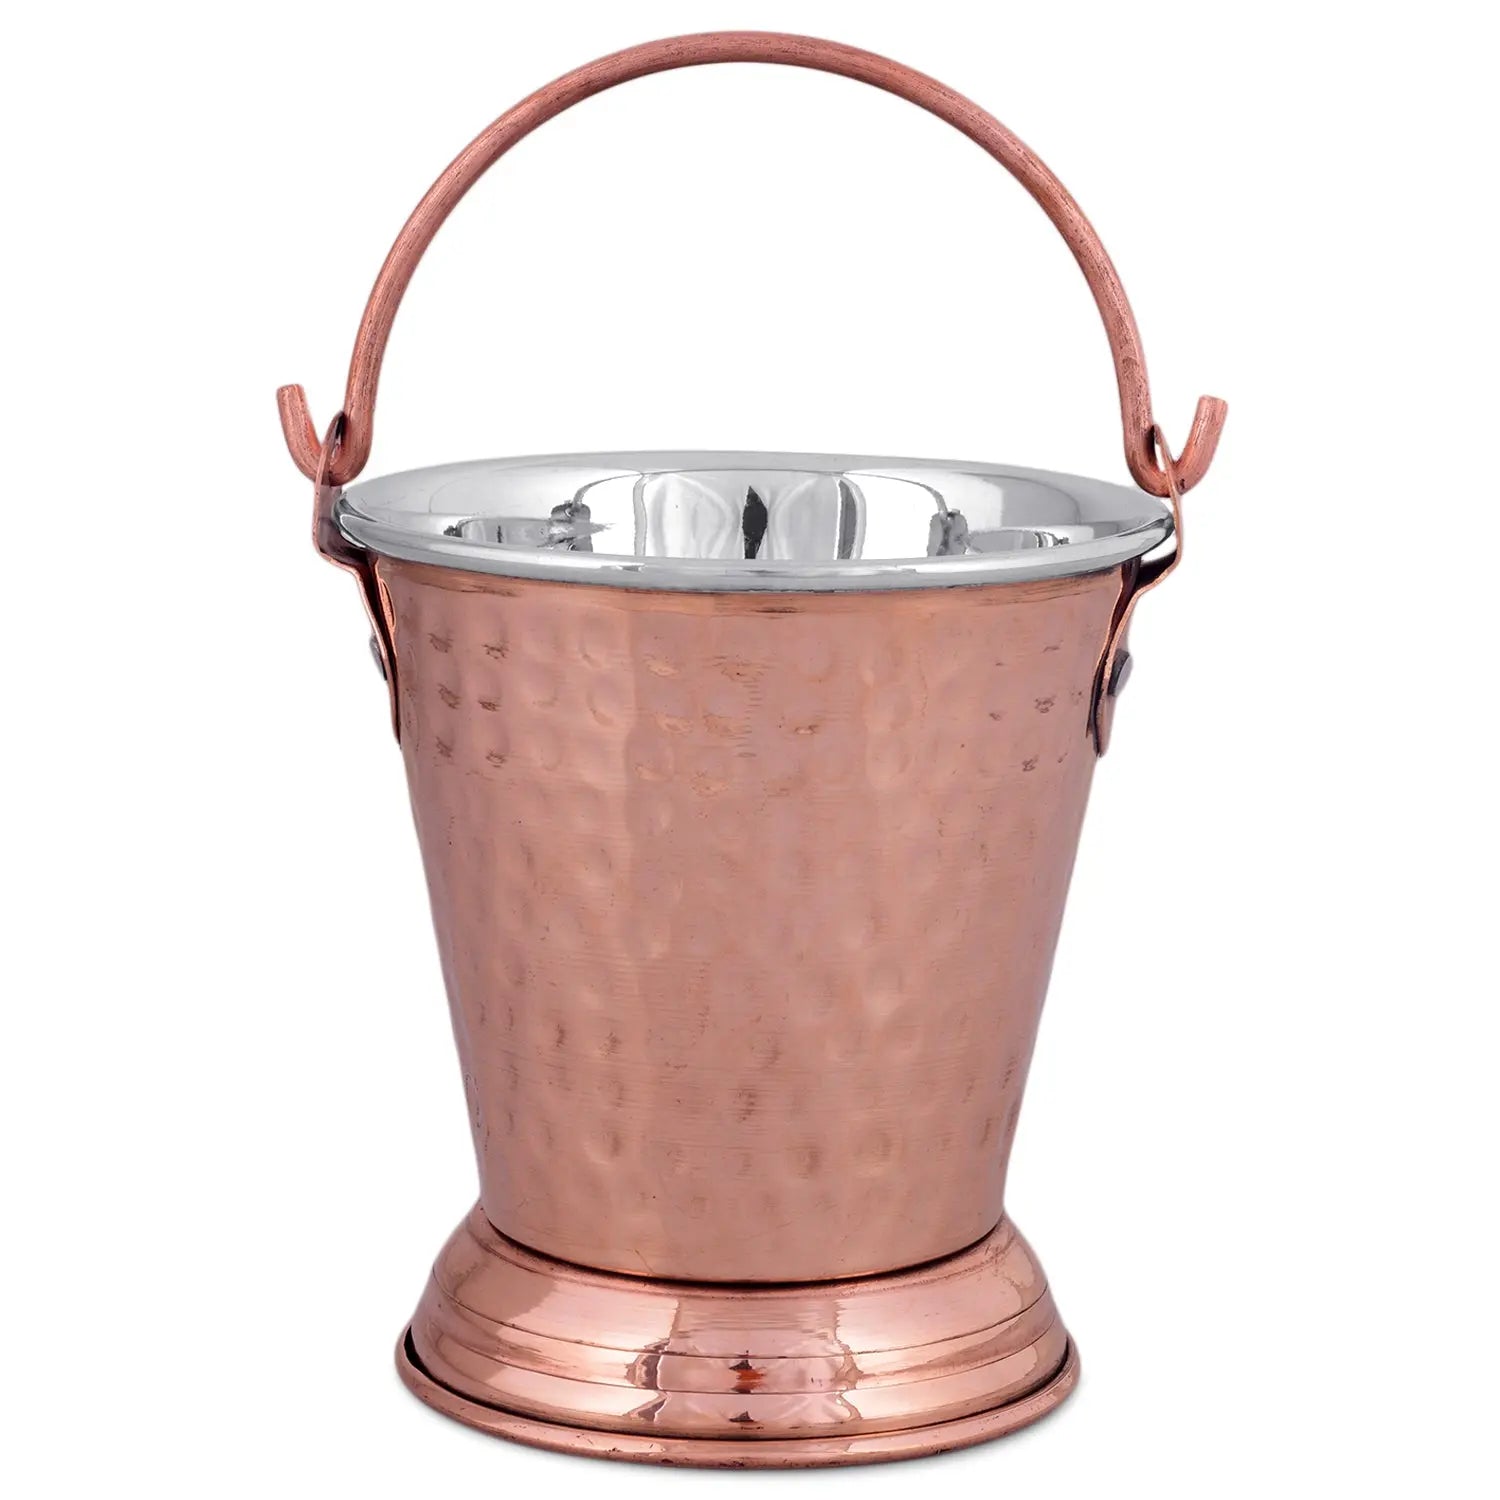 Crockery Wala & Company Steel Copper Bucket Balti, for Serving Dishes, Kitchenware & Tableware - CROCKERY WALA AND COMPANY 